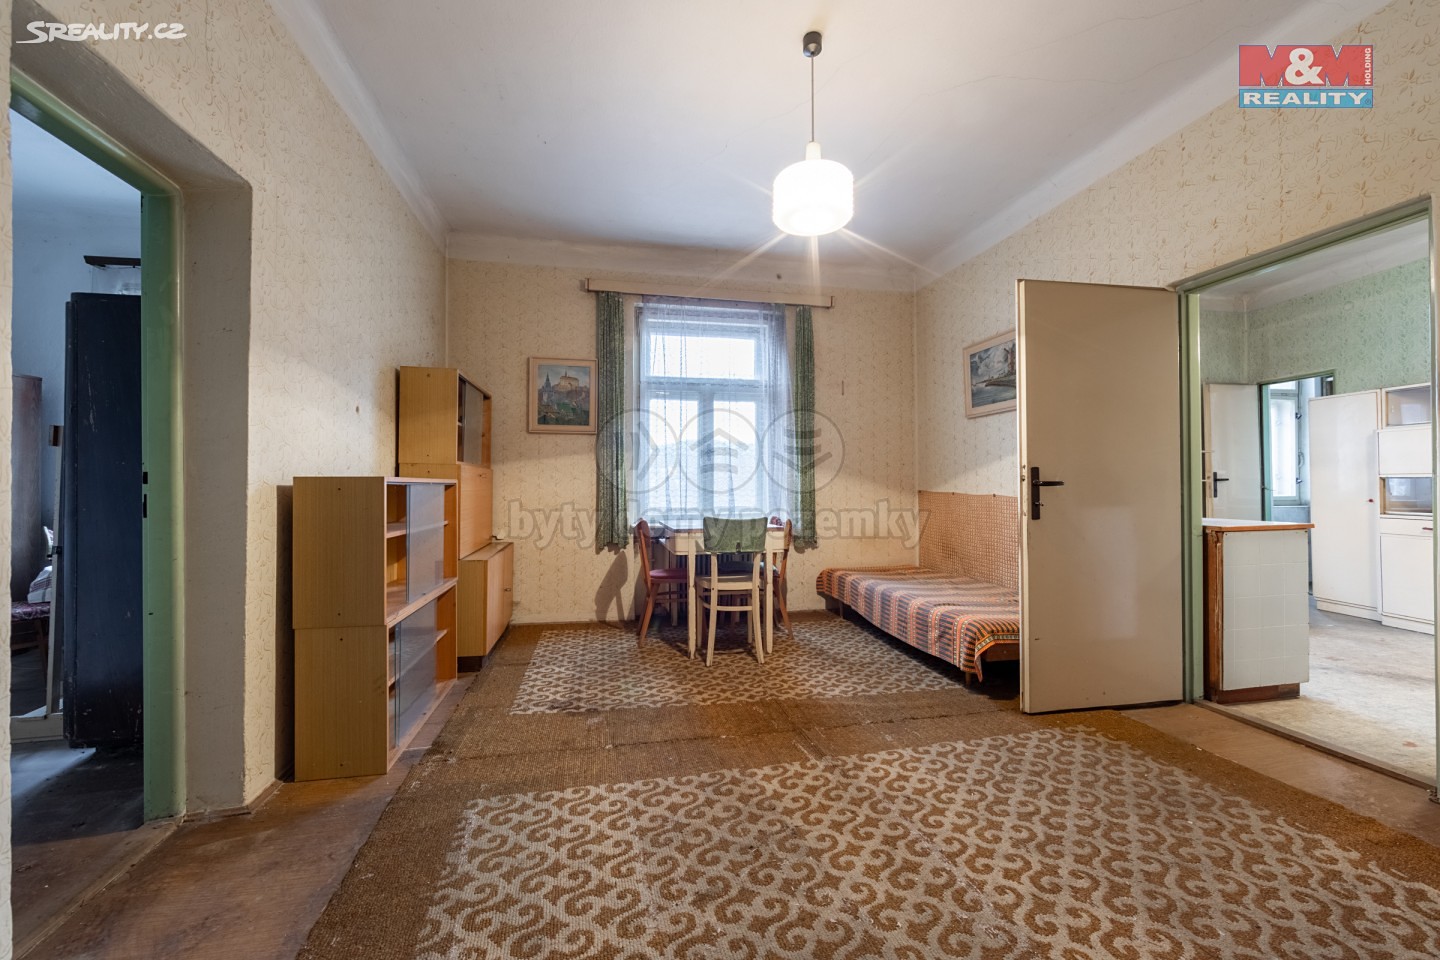 Prodej  rodinného domu 243 m², pozemek 703 m², Chebská, Karlovy Vary - Dvory